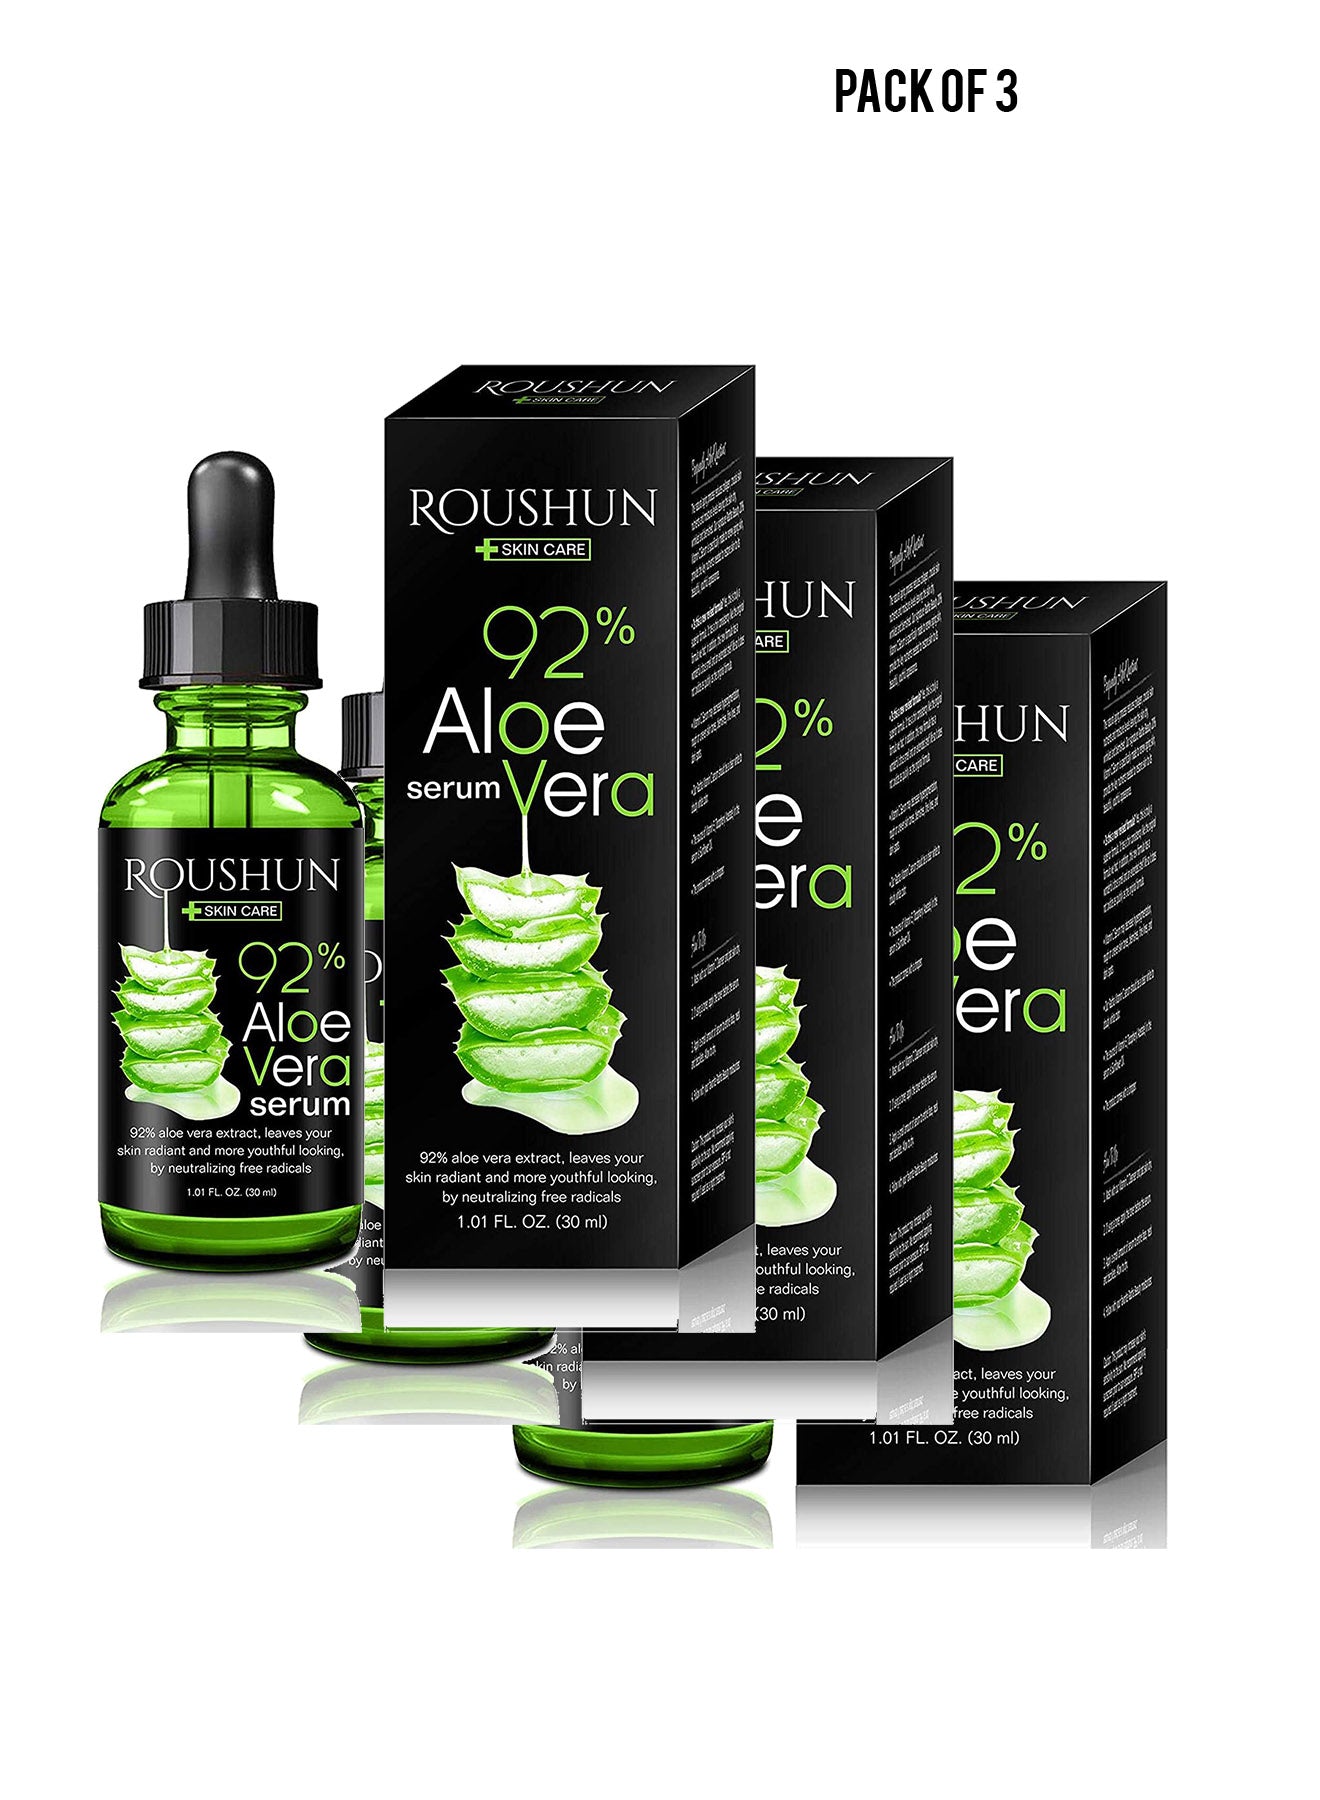 Roushun Skincare 92 Aloevera  Face Serum 30ml101floz Value Pack of 3 